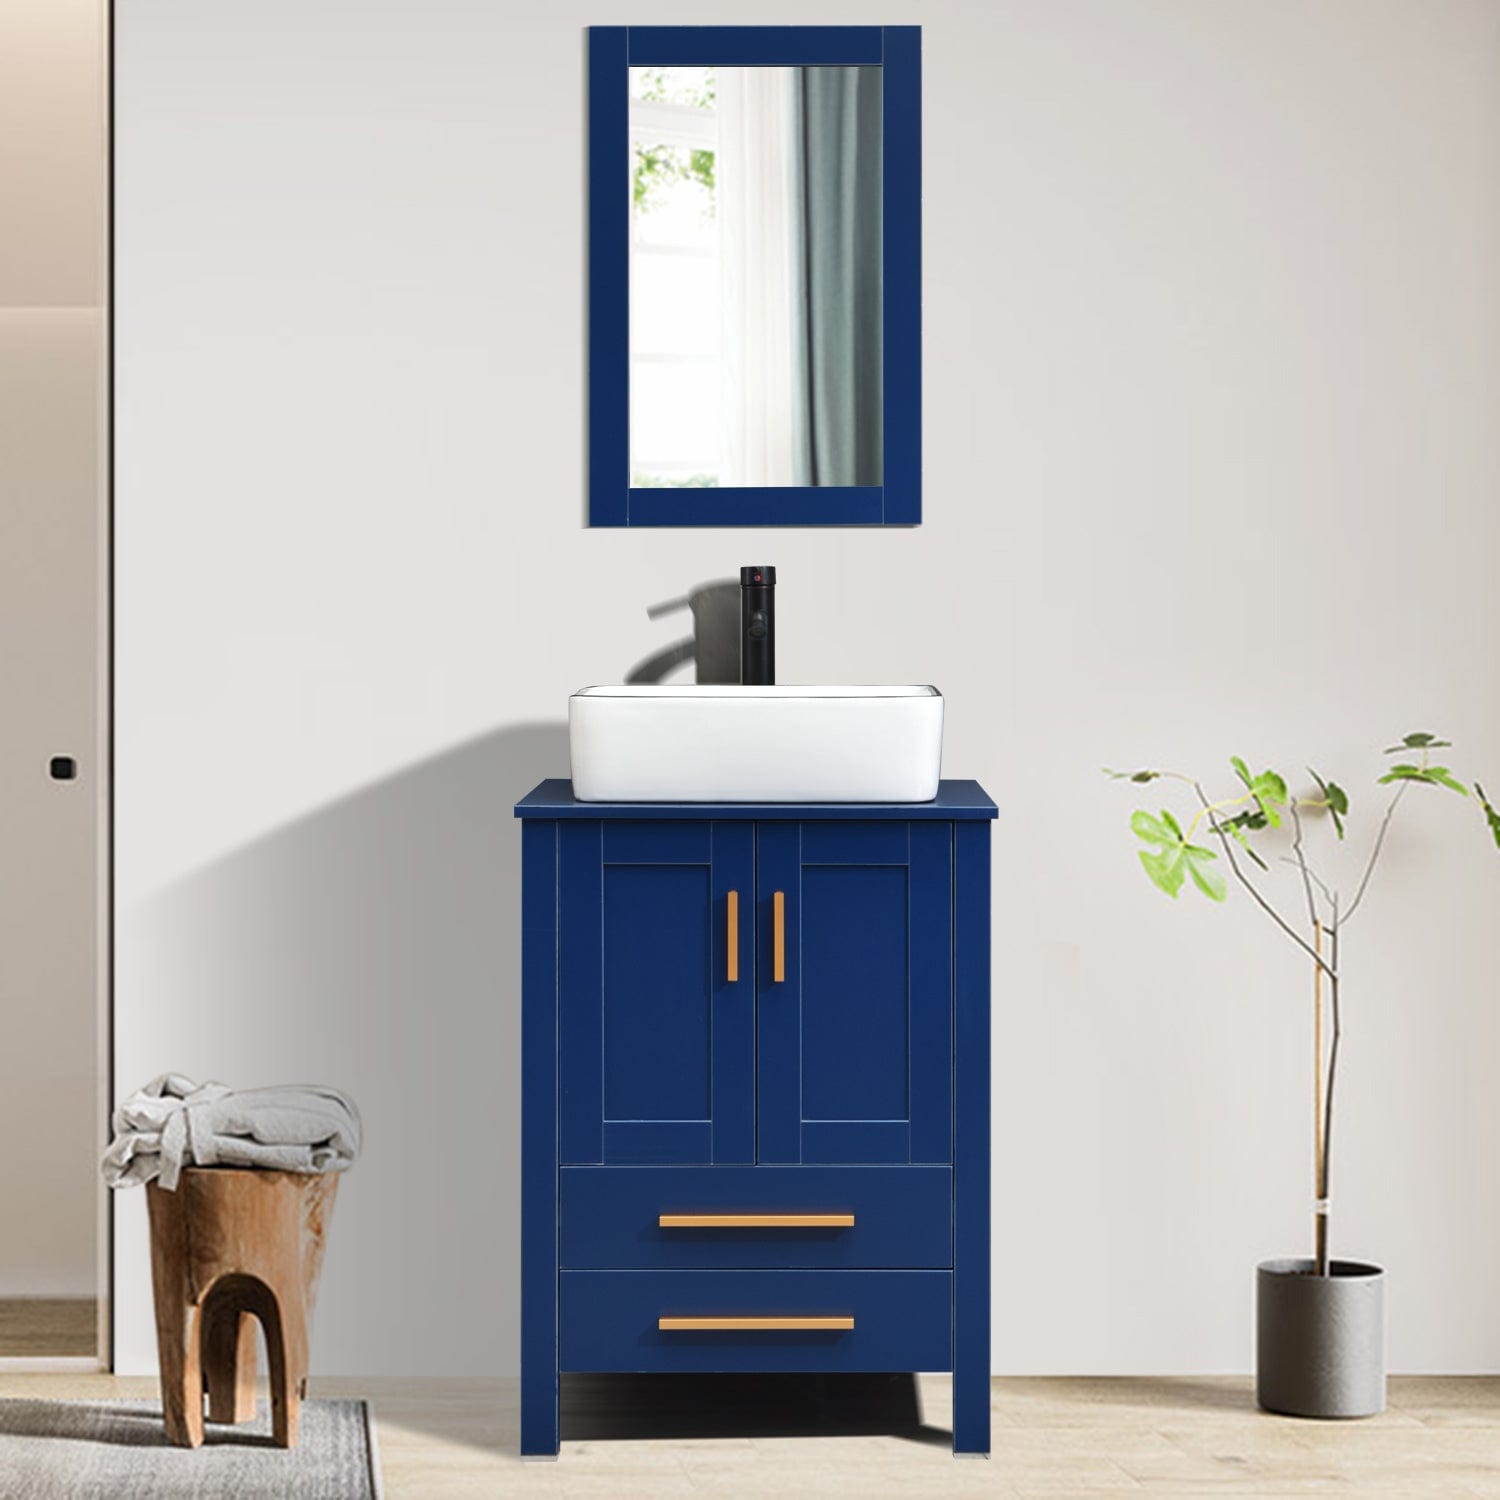 Elecwish 24-Inch bathroom wood vanity with white ceramic sink set stand pedestal cabinet with mirror display scene